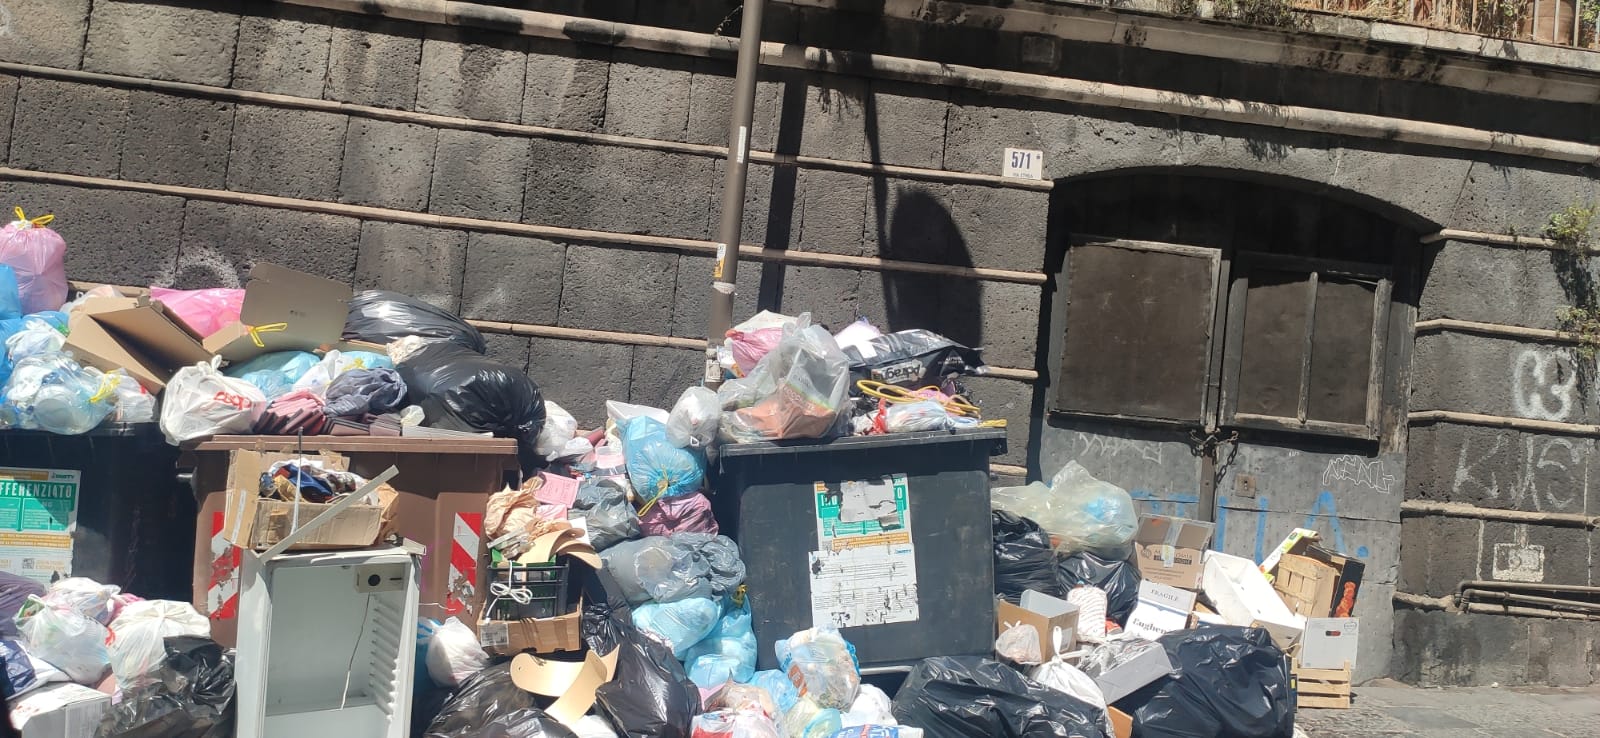 Emergenza rifiuti Catania: ancora ritardi